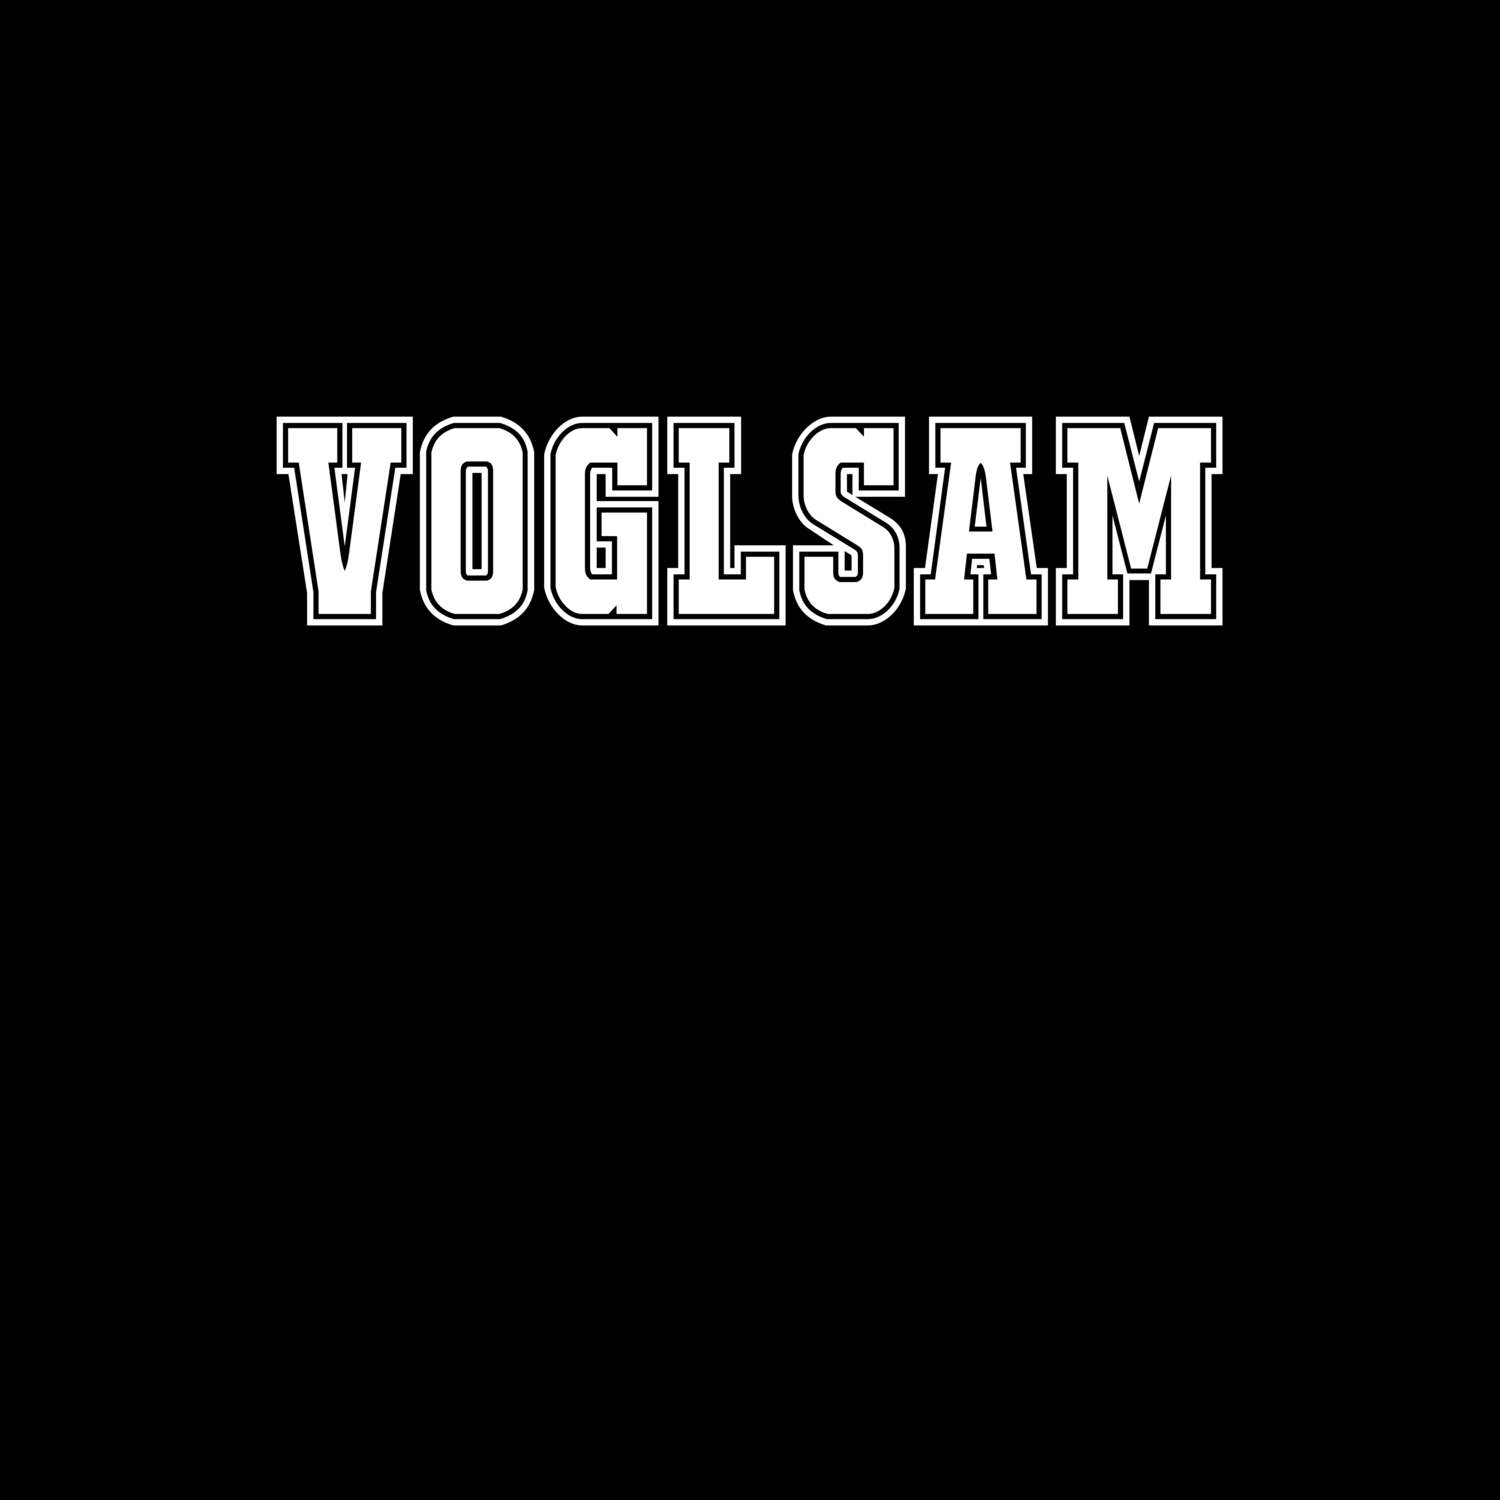 Voglsam T-Shirt »Classic«